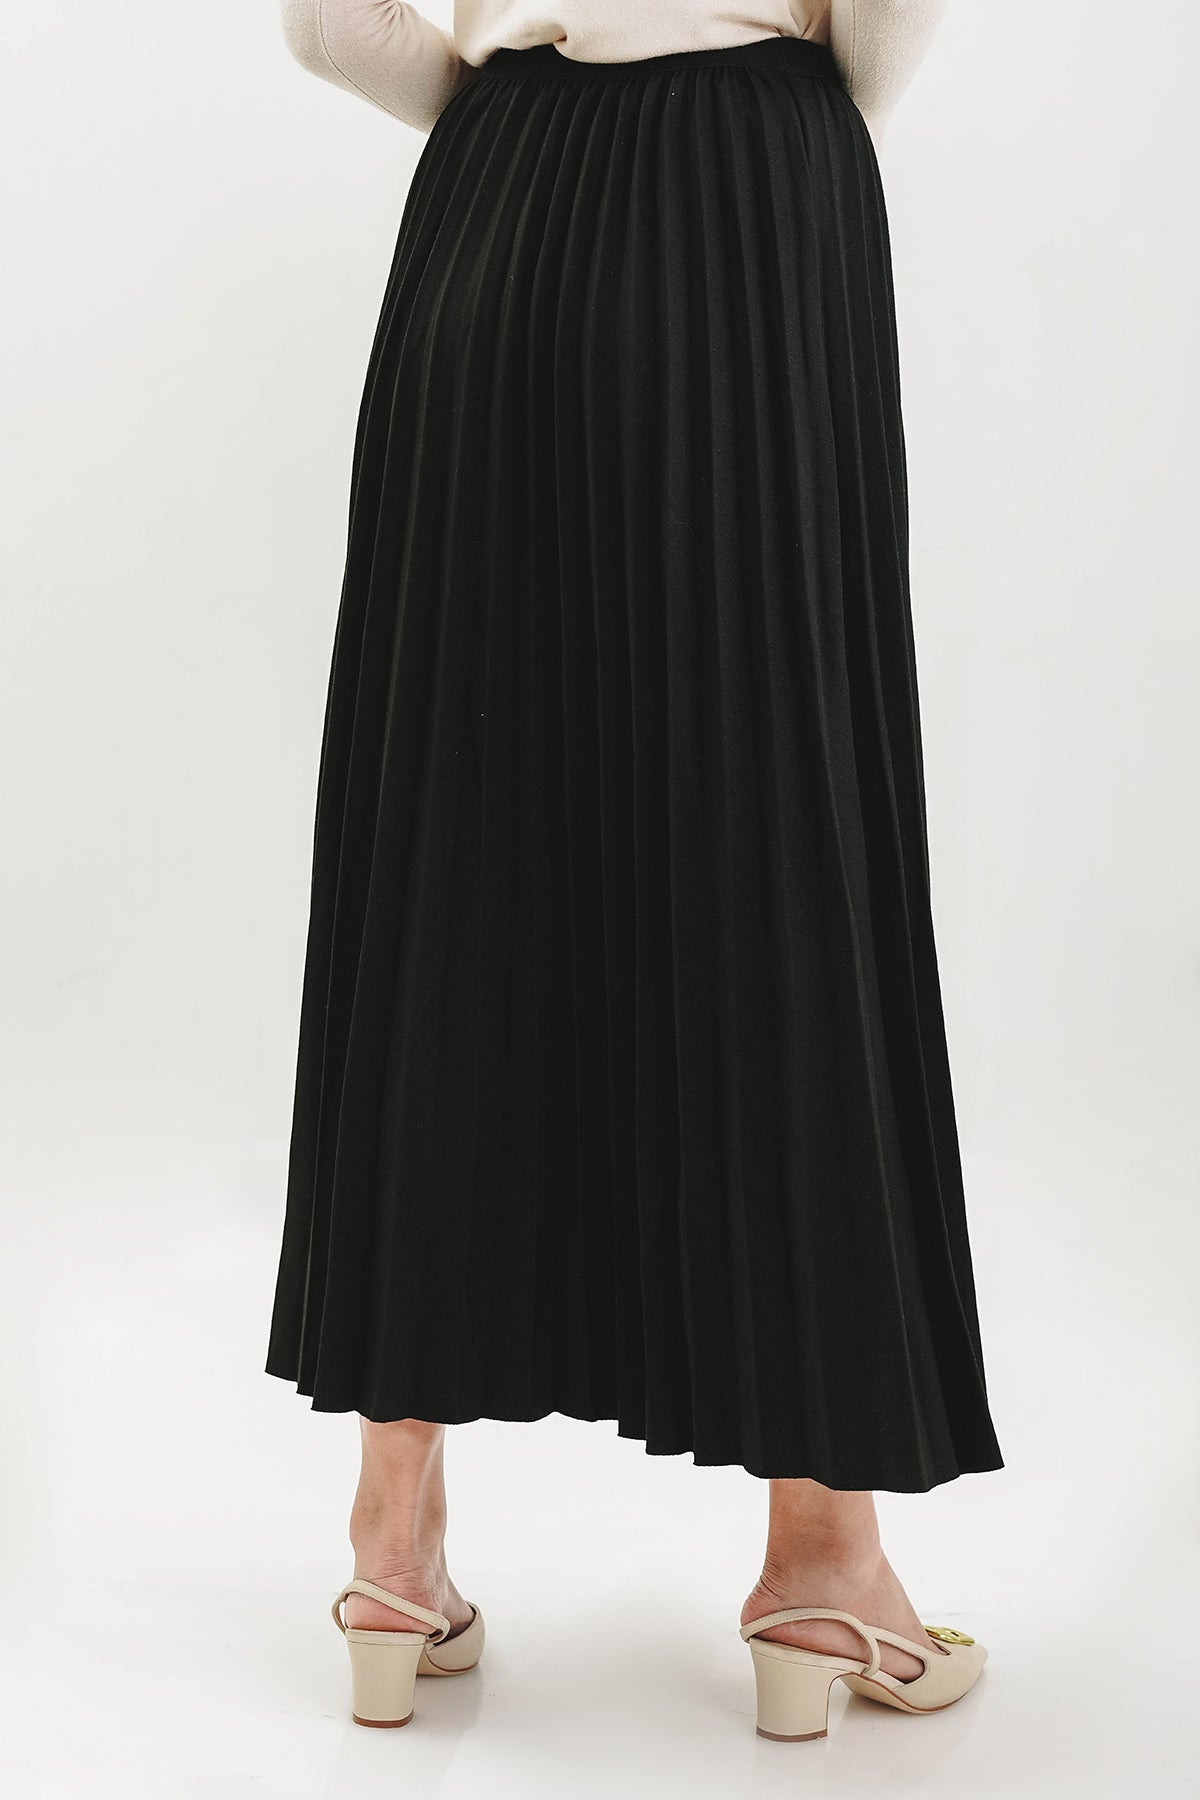 Black Dear Pleats Skirt